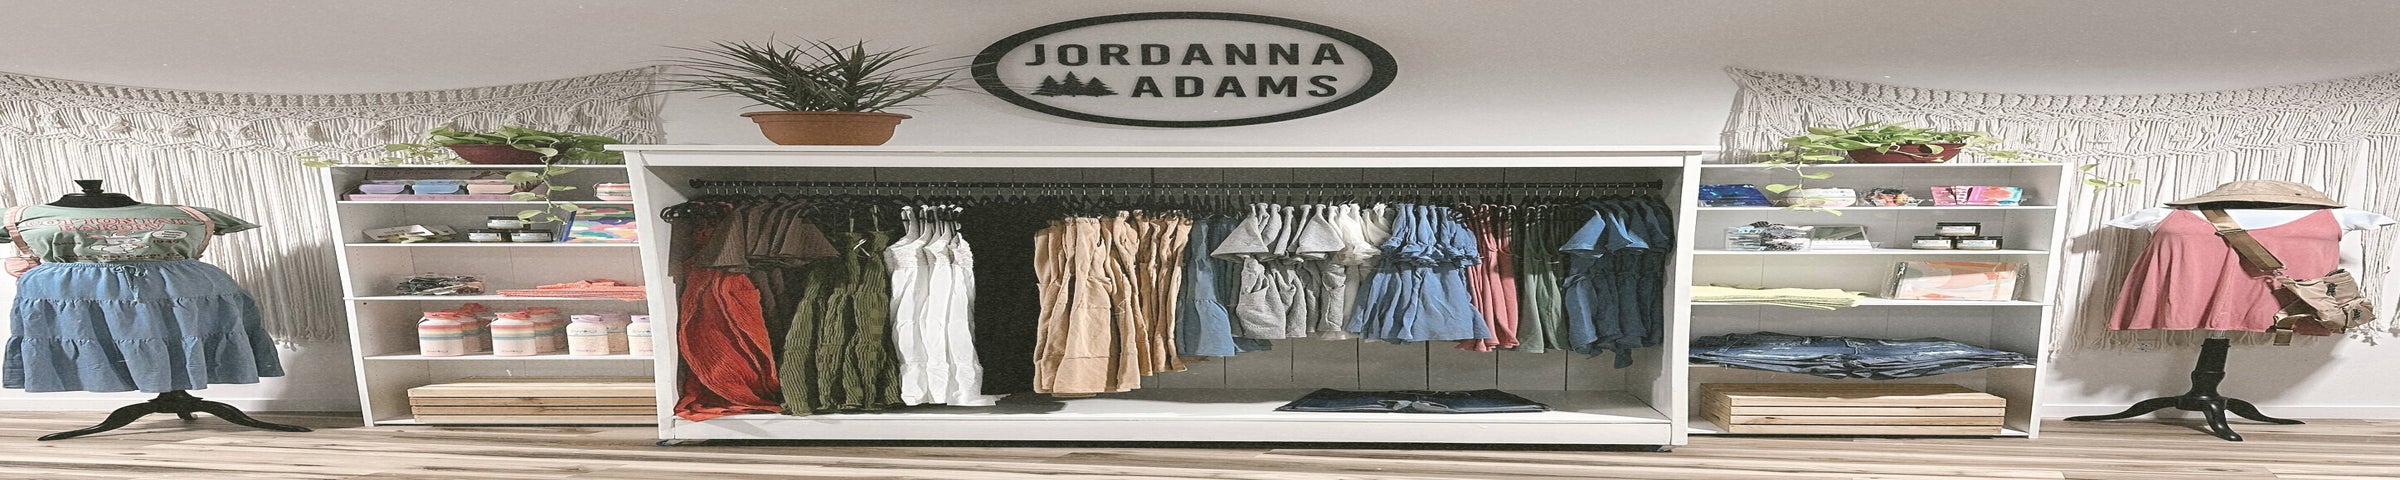 Dene Adams, LLC - Clothing Store